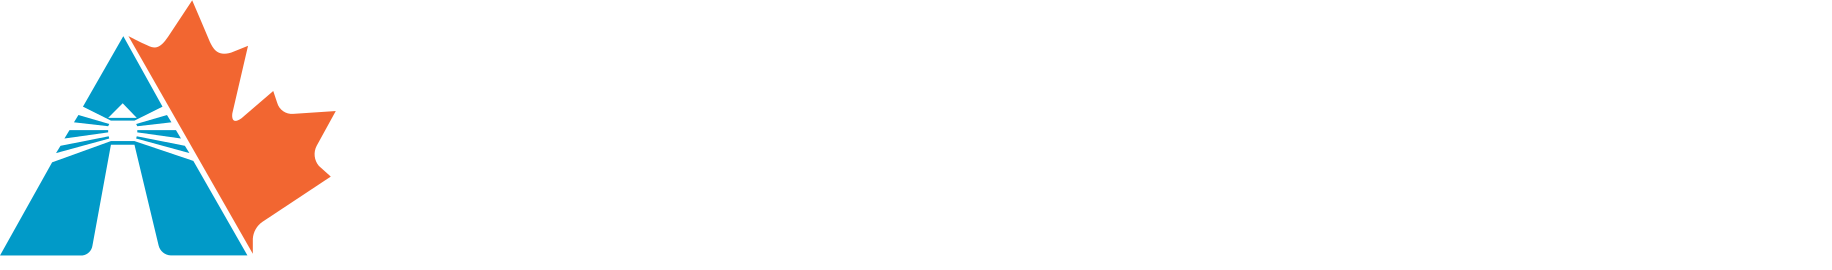 Atlantic Canada Opportunities Agency